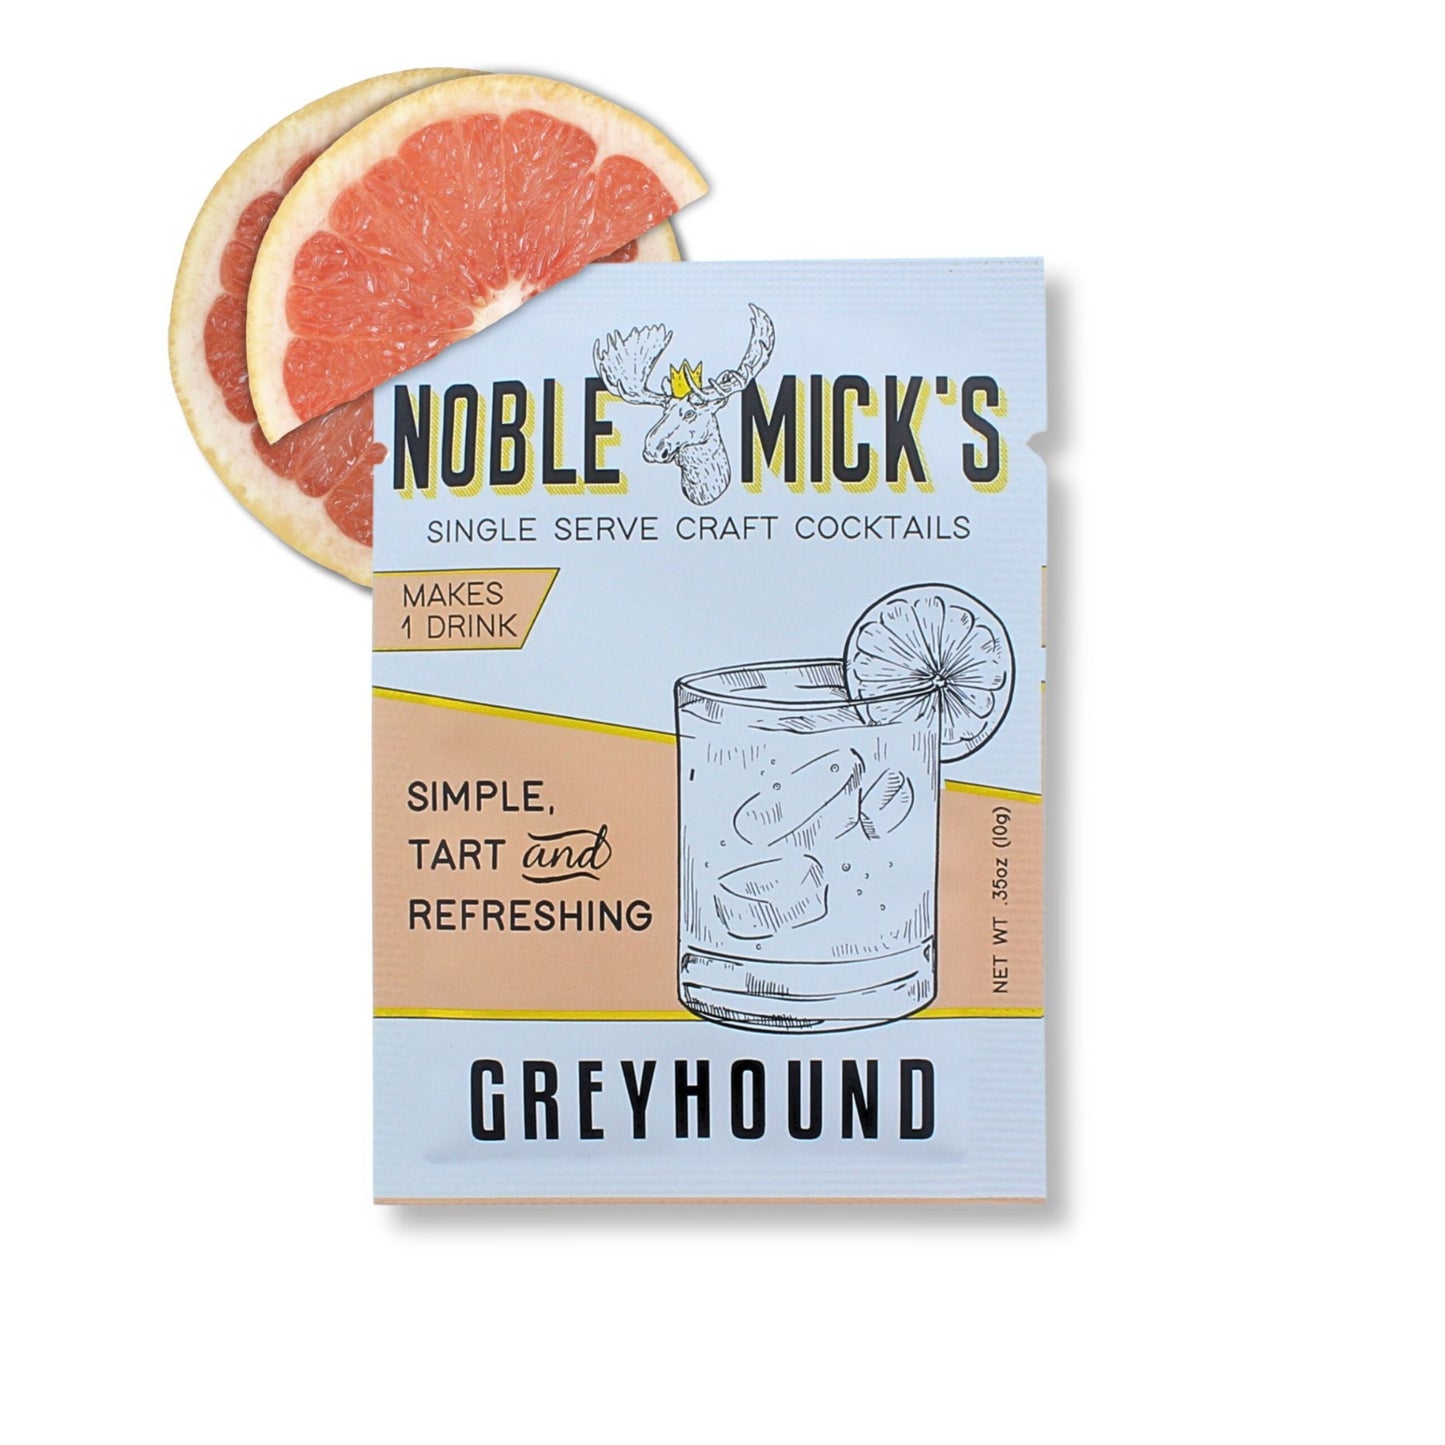 Greyhound (48-pack)